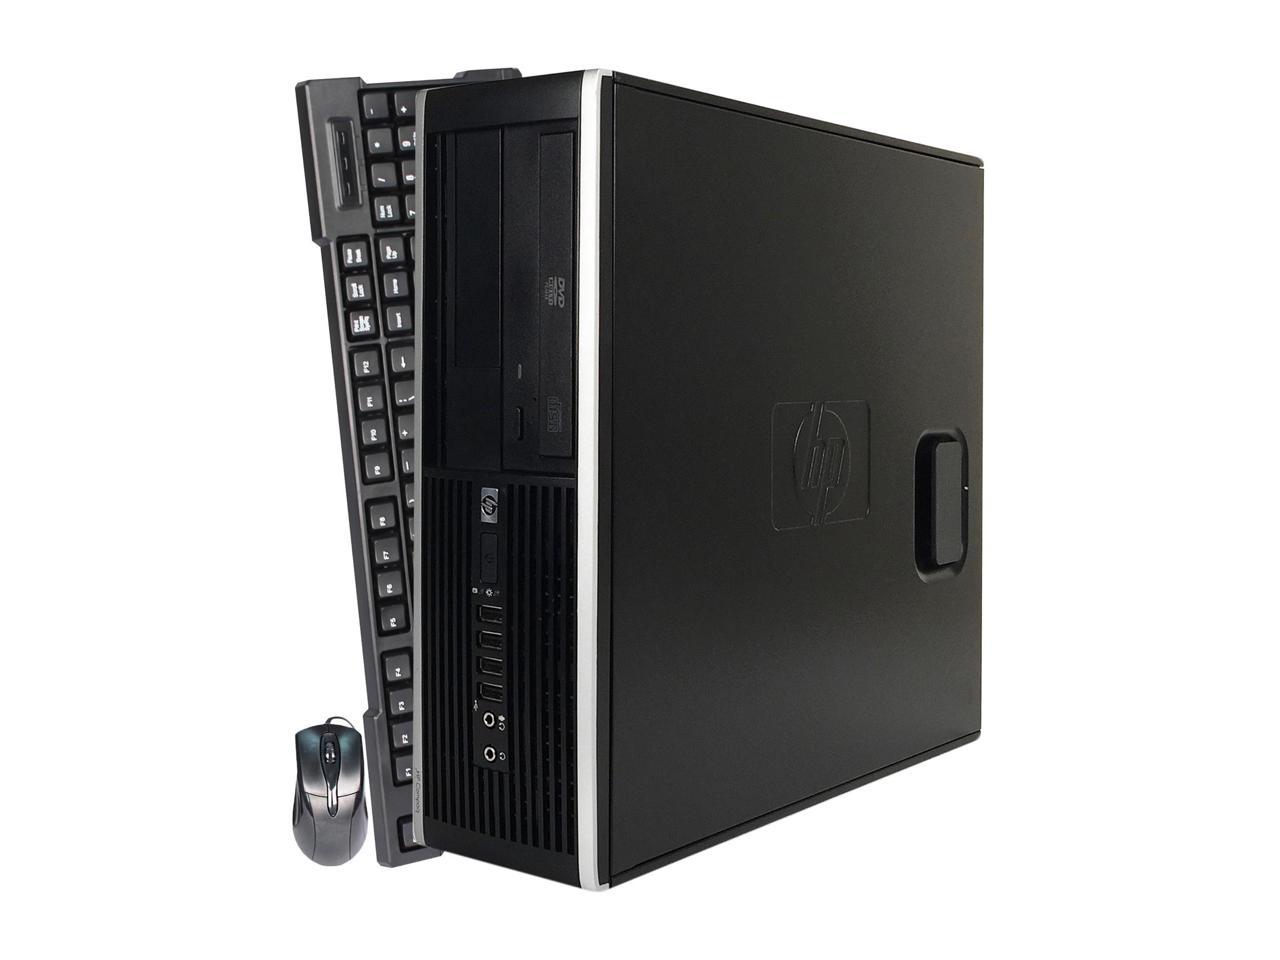 HP Desktop Computer Pro 6300 Intel Core i3 3rd Gen 3220 (3.30 GHz) 4 GB